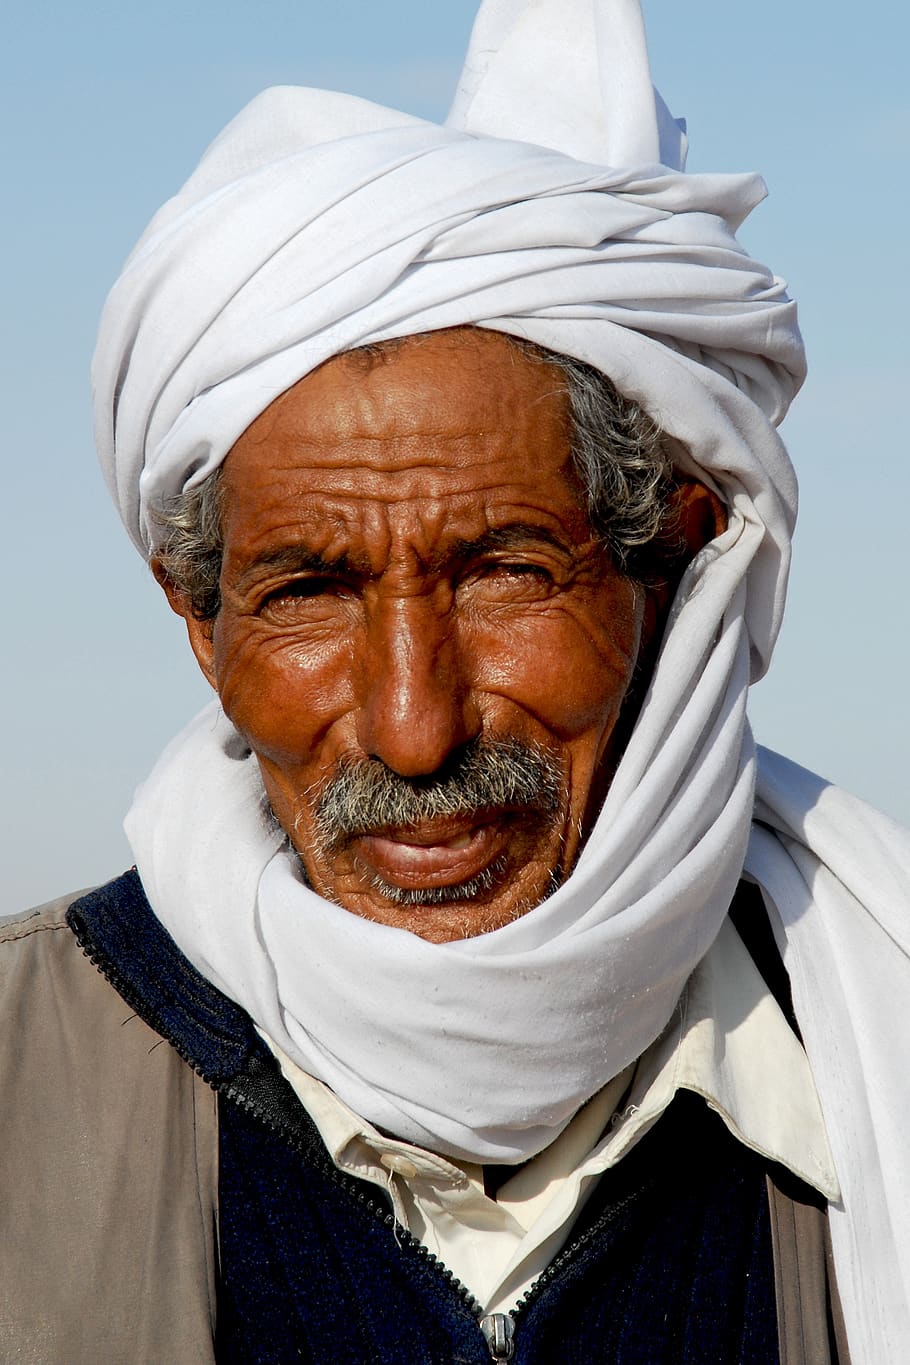 tunisia, nomad, bedouin, portrait, face, headwear, turban, fold, old, one person